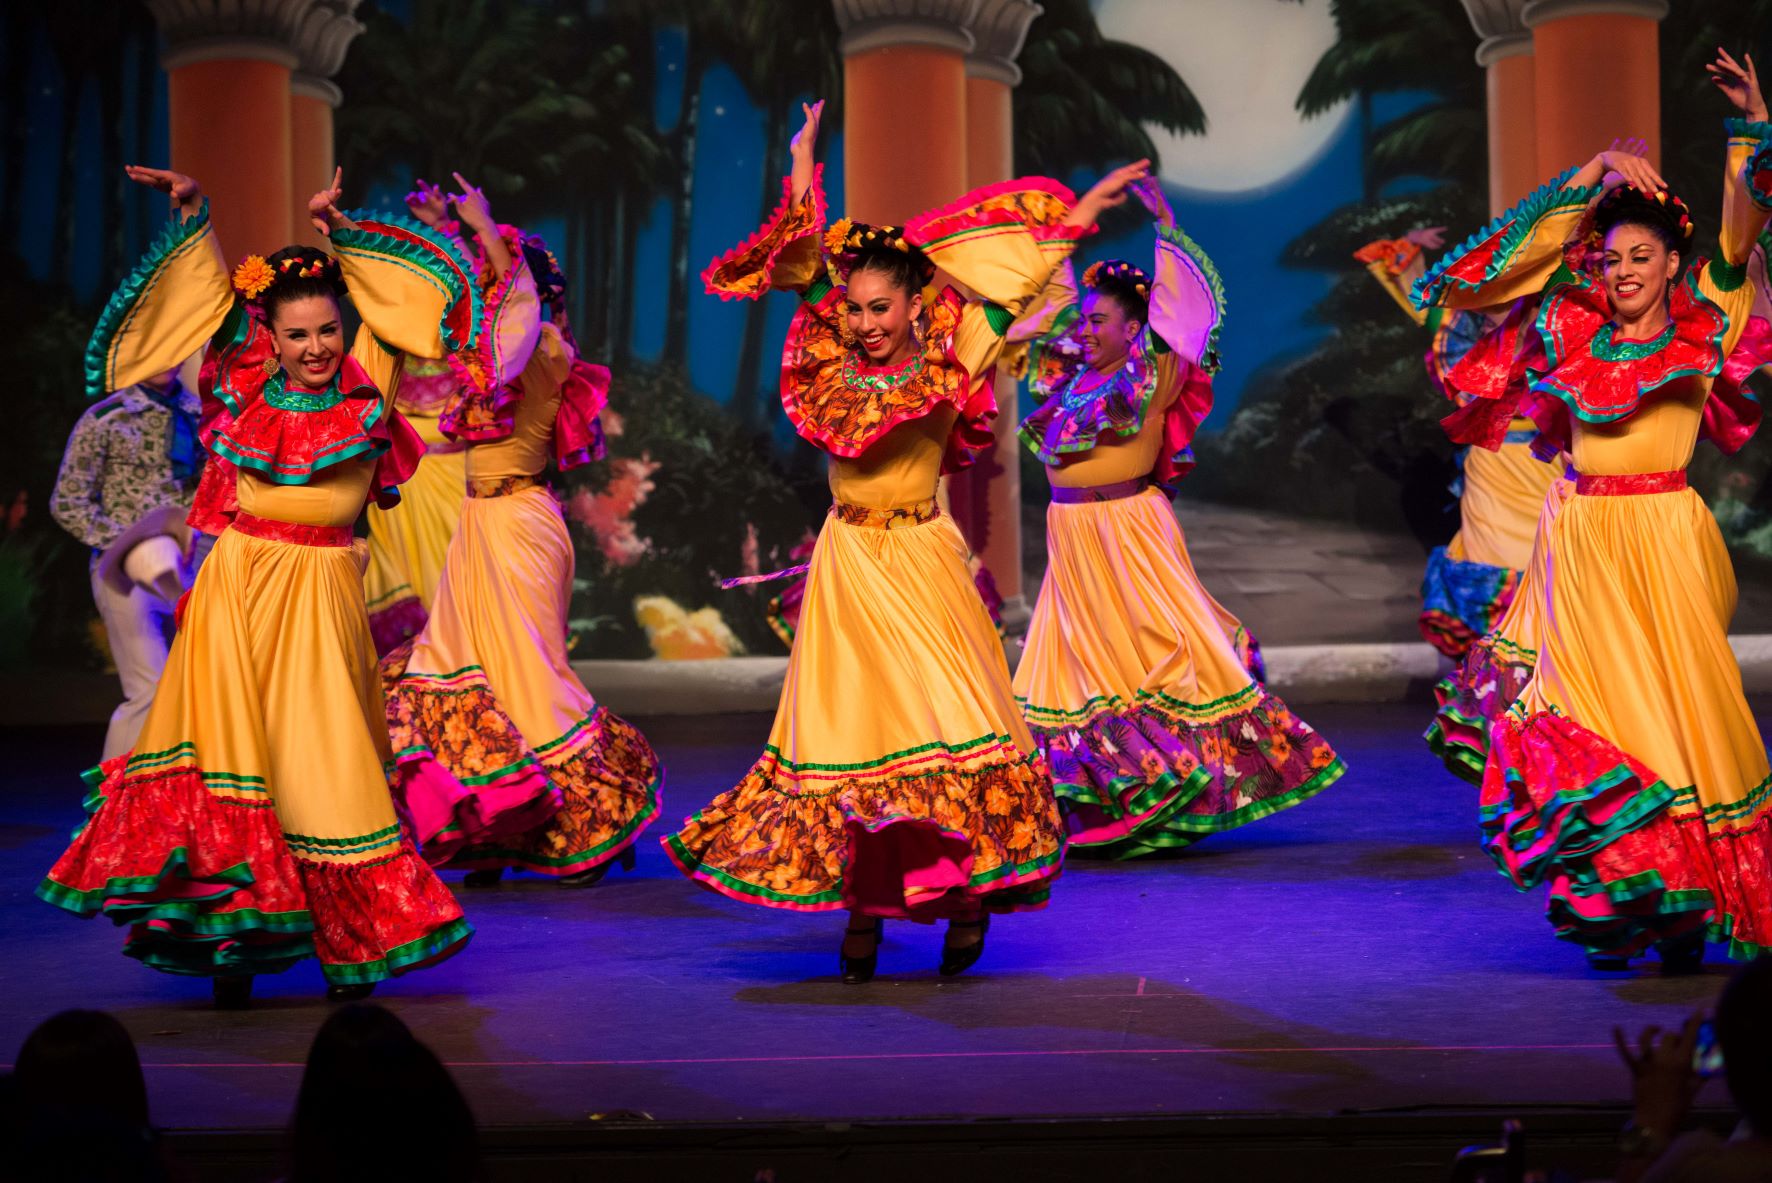 Viva el Arte de Santa Bárbara! Announces Its 2023-2024 Season Featuring  Prominent Musical and Dance Performers - The Santa Barbara Independent